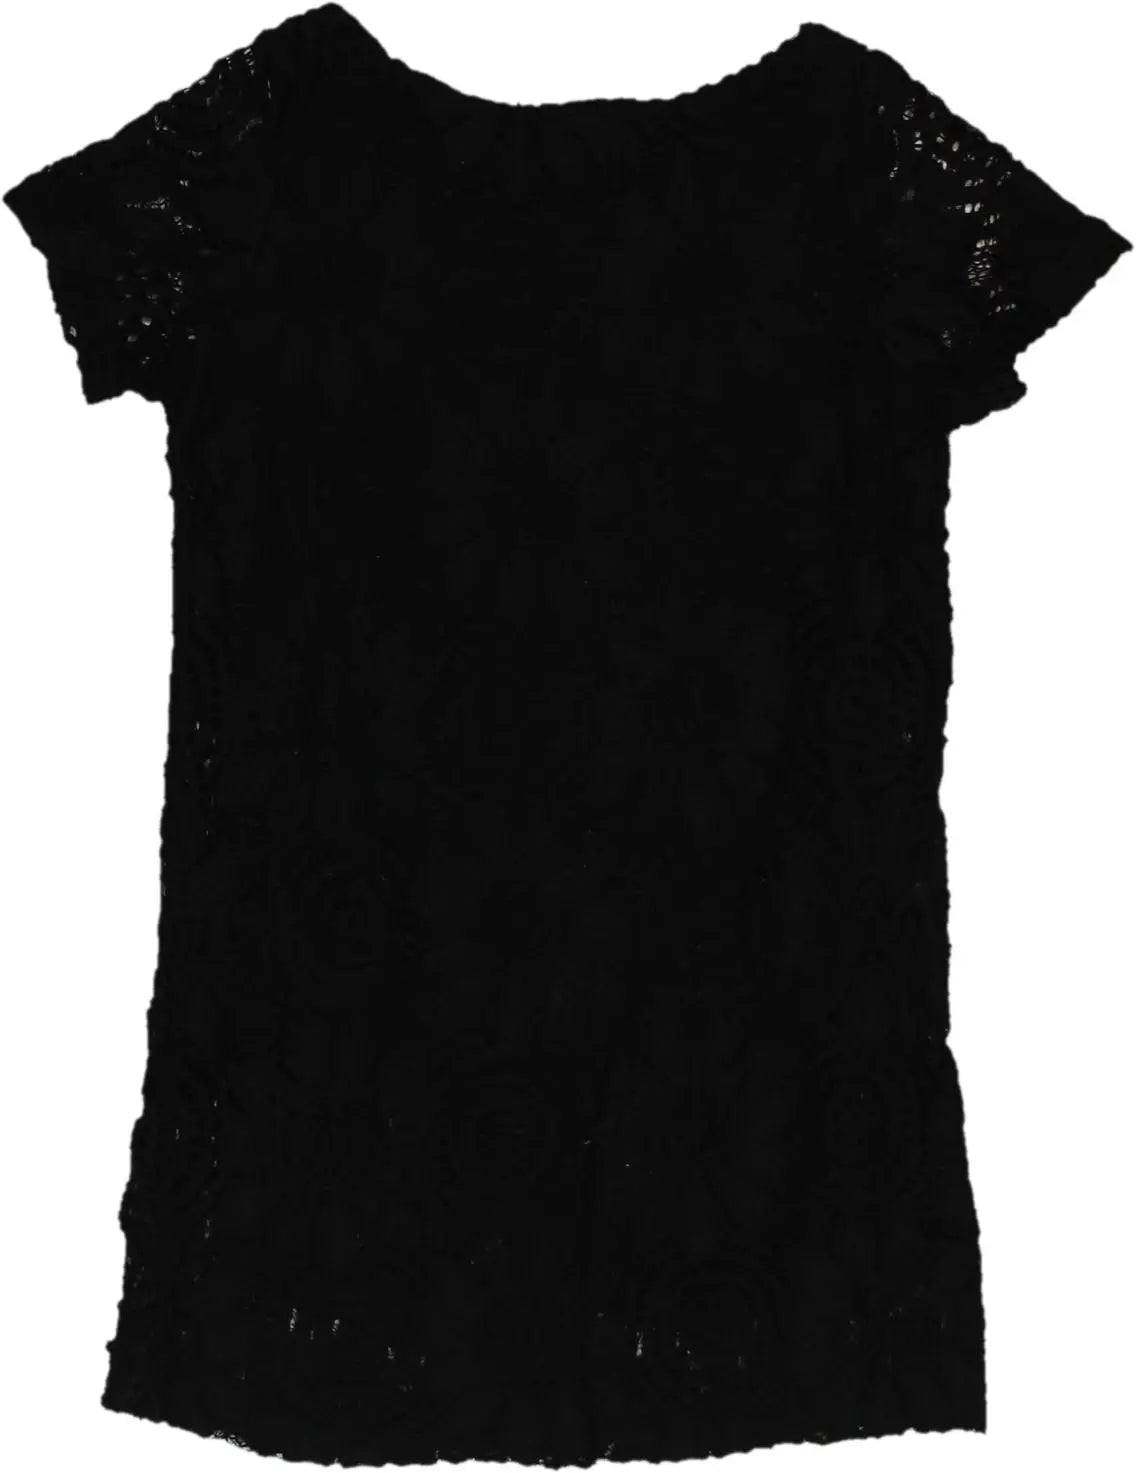 WE - Black Dress- ThriftTale.com - Vintage and second handclothing